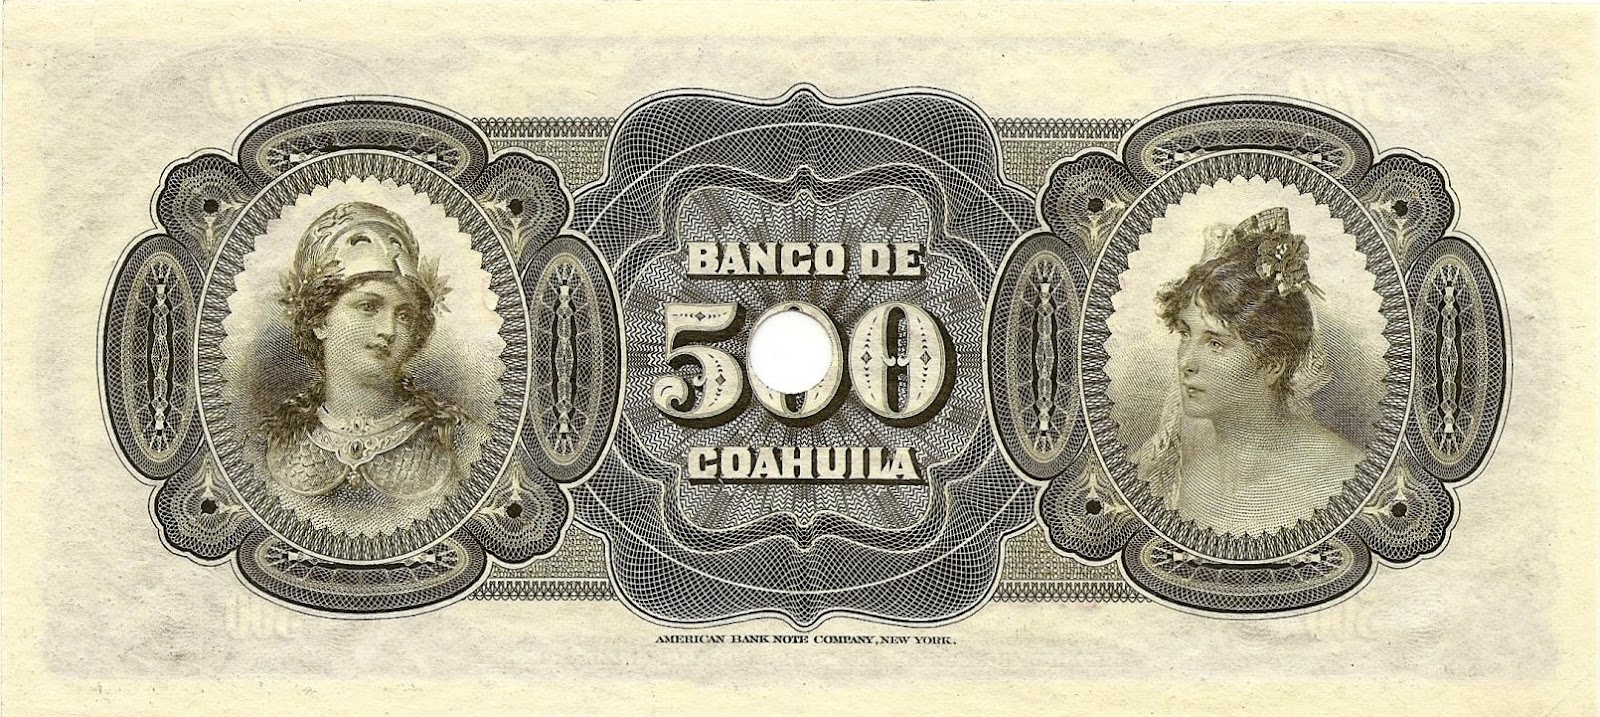 T me banknotes. 500 Купюра Мехико. Старые купюры Мексики. Мексиканский песо 1898. Номинал мексиканских песо.